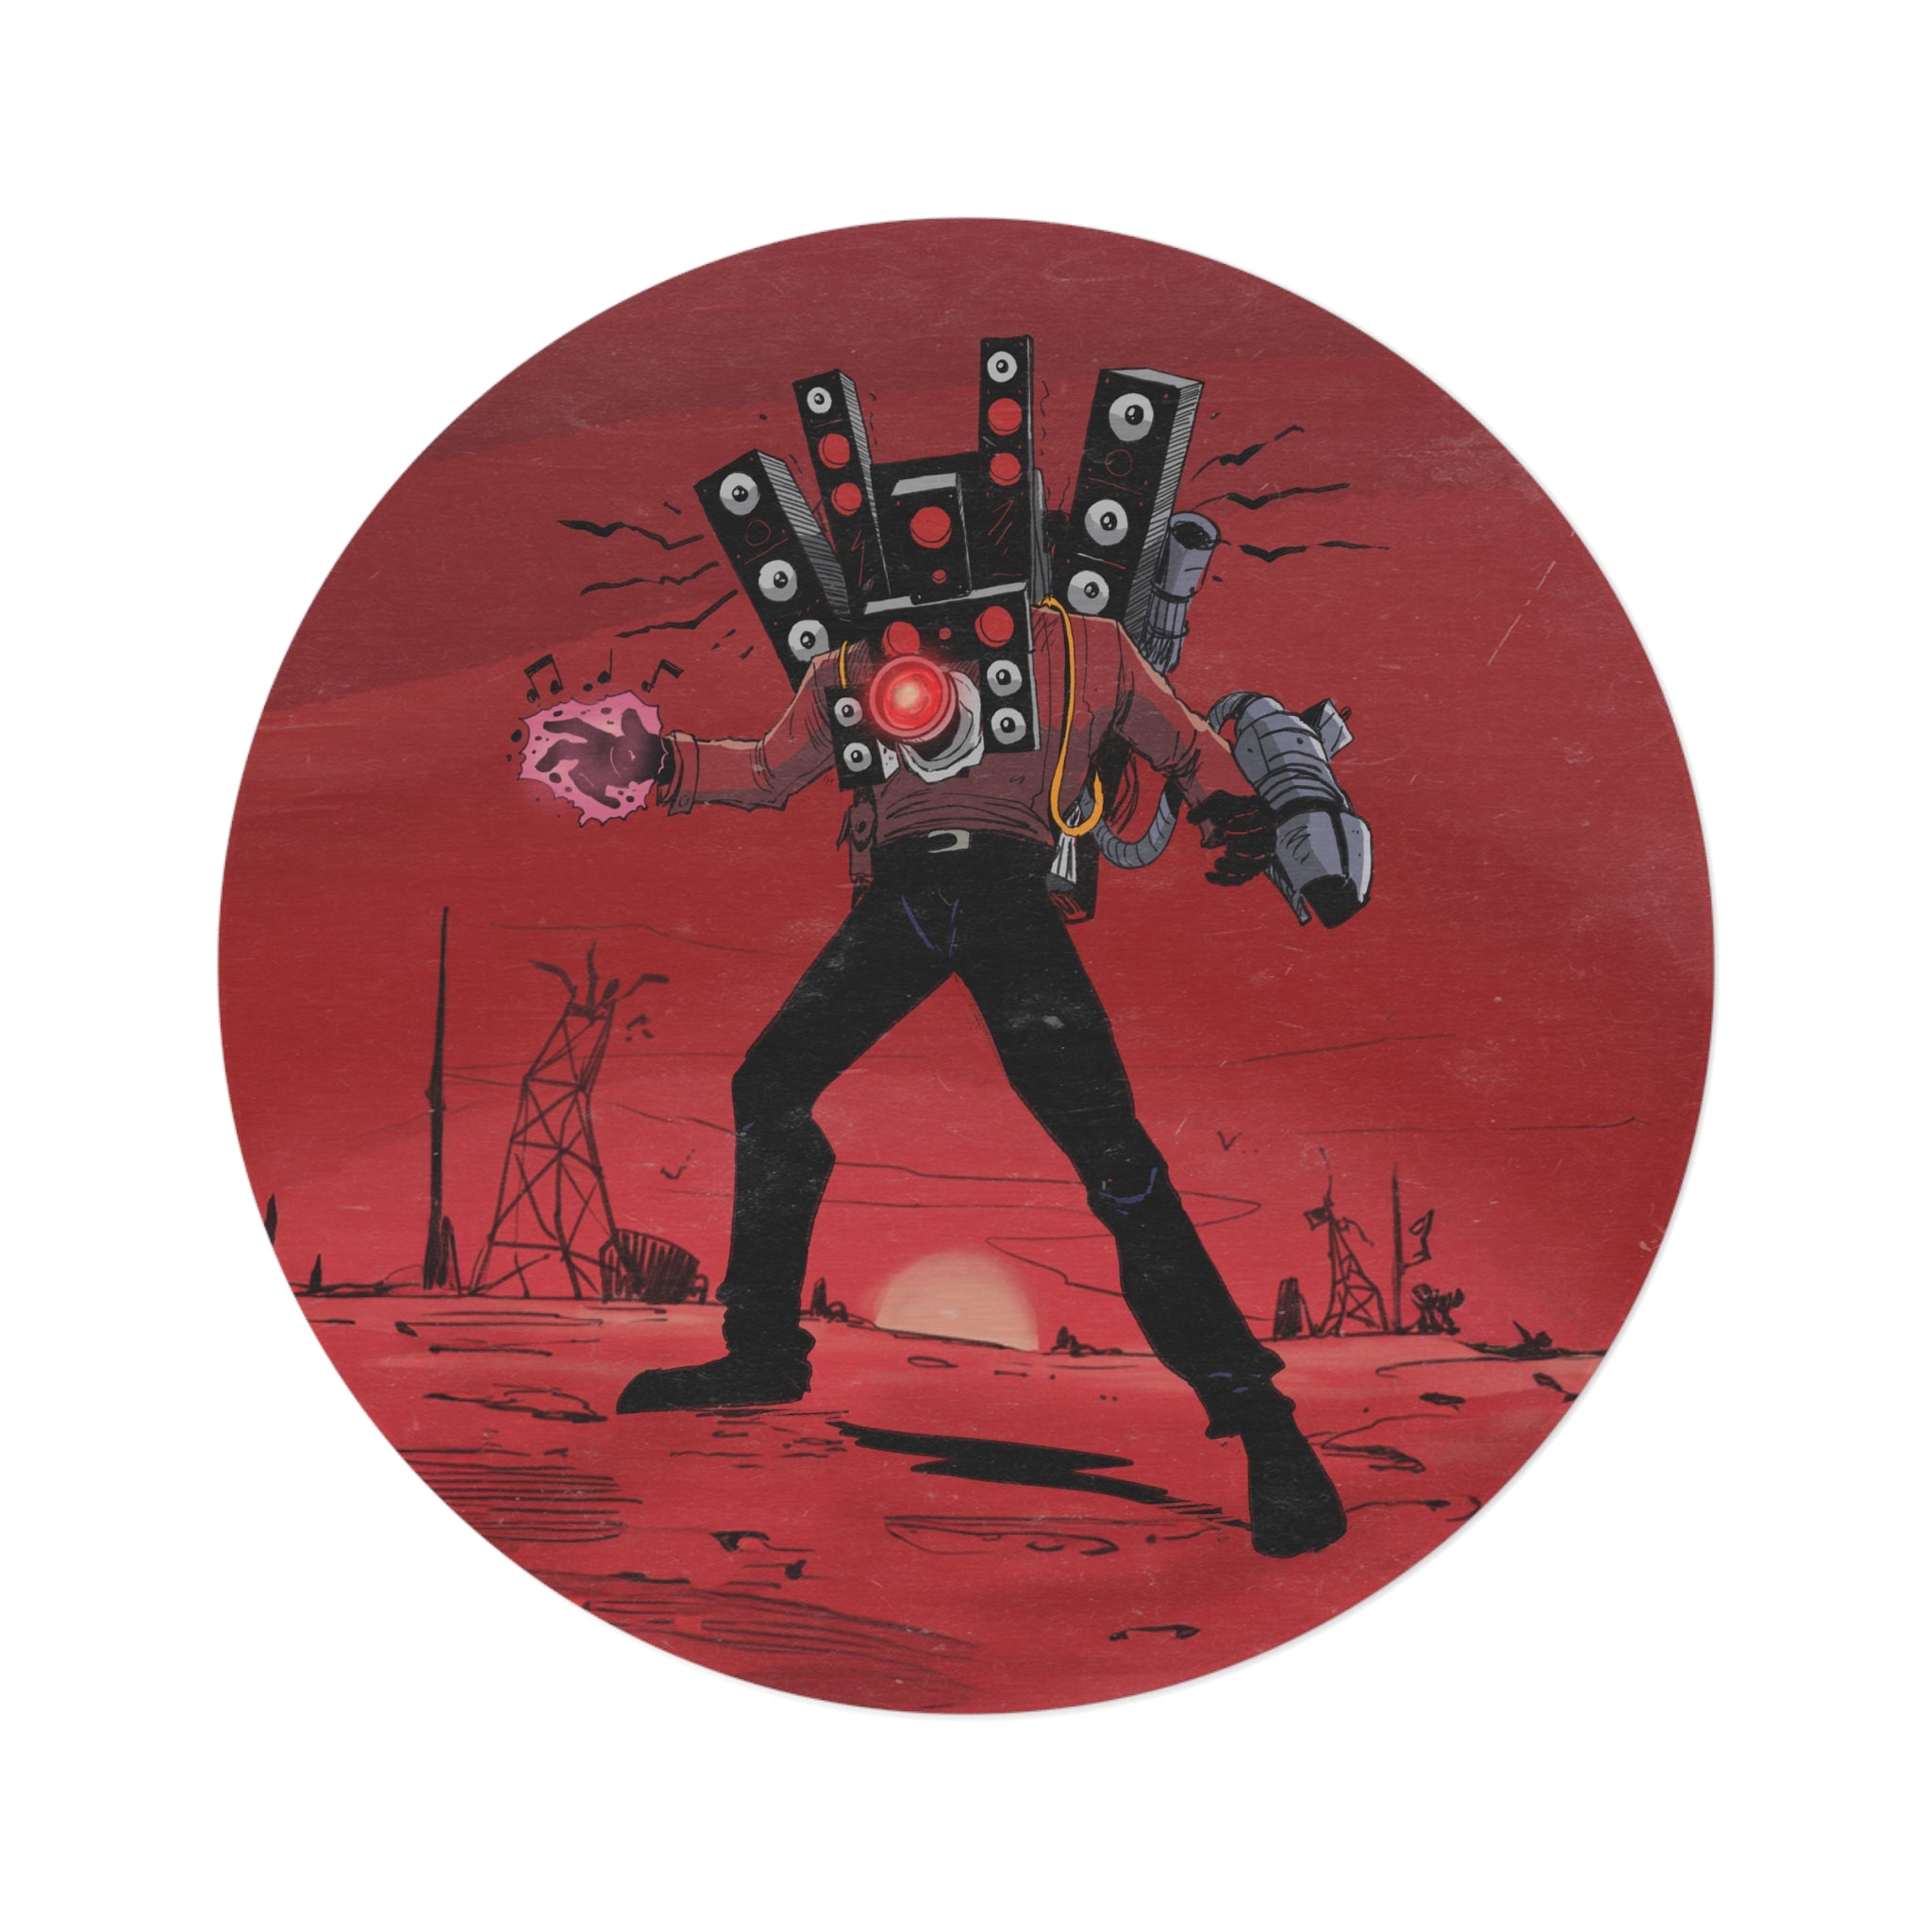 Round red rug featuring a vibrant illustration of Titan Speakerman